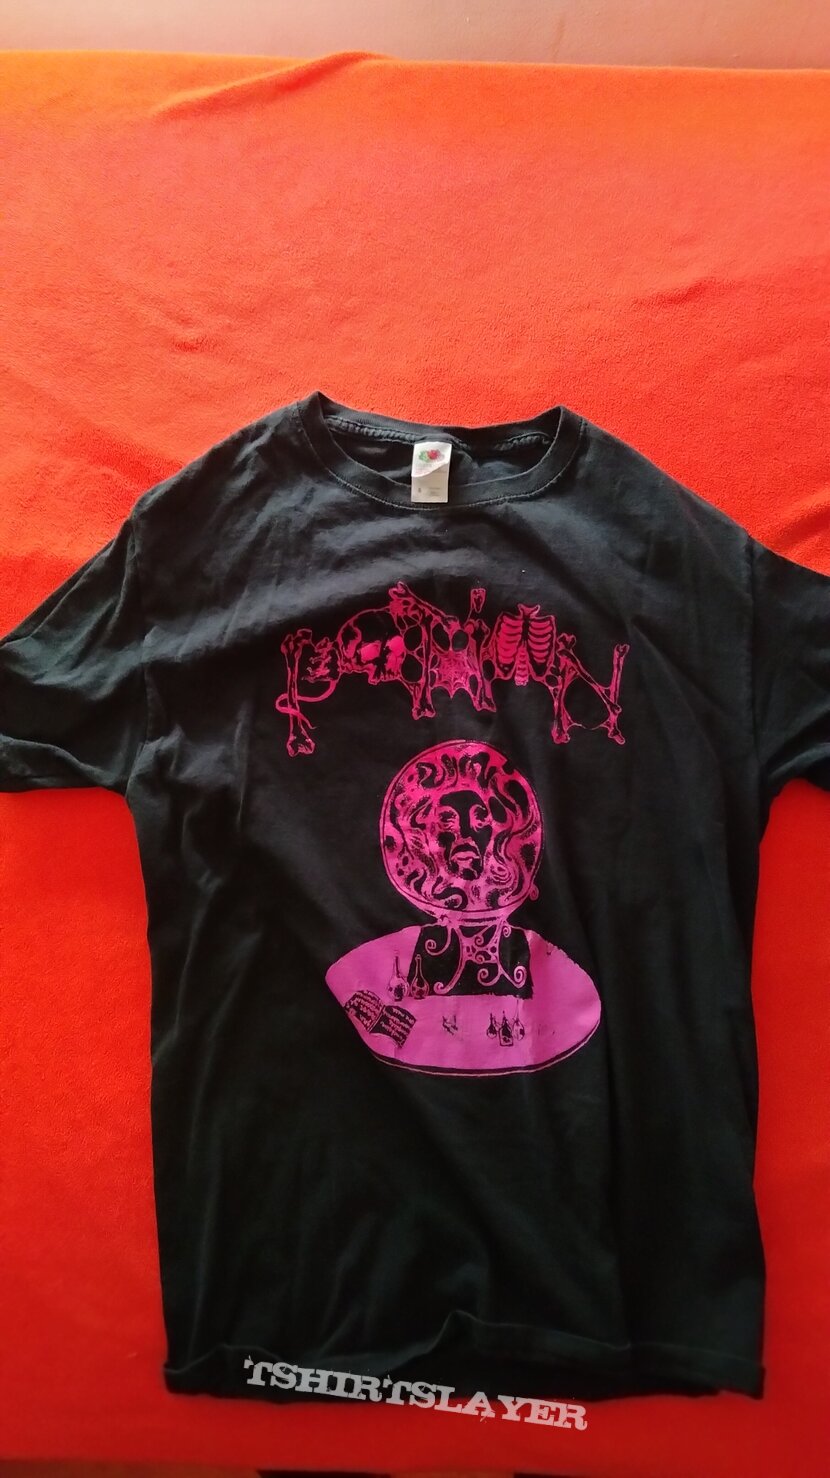 Potion, Medusa logo tee shirt